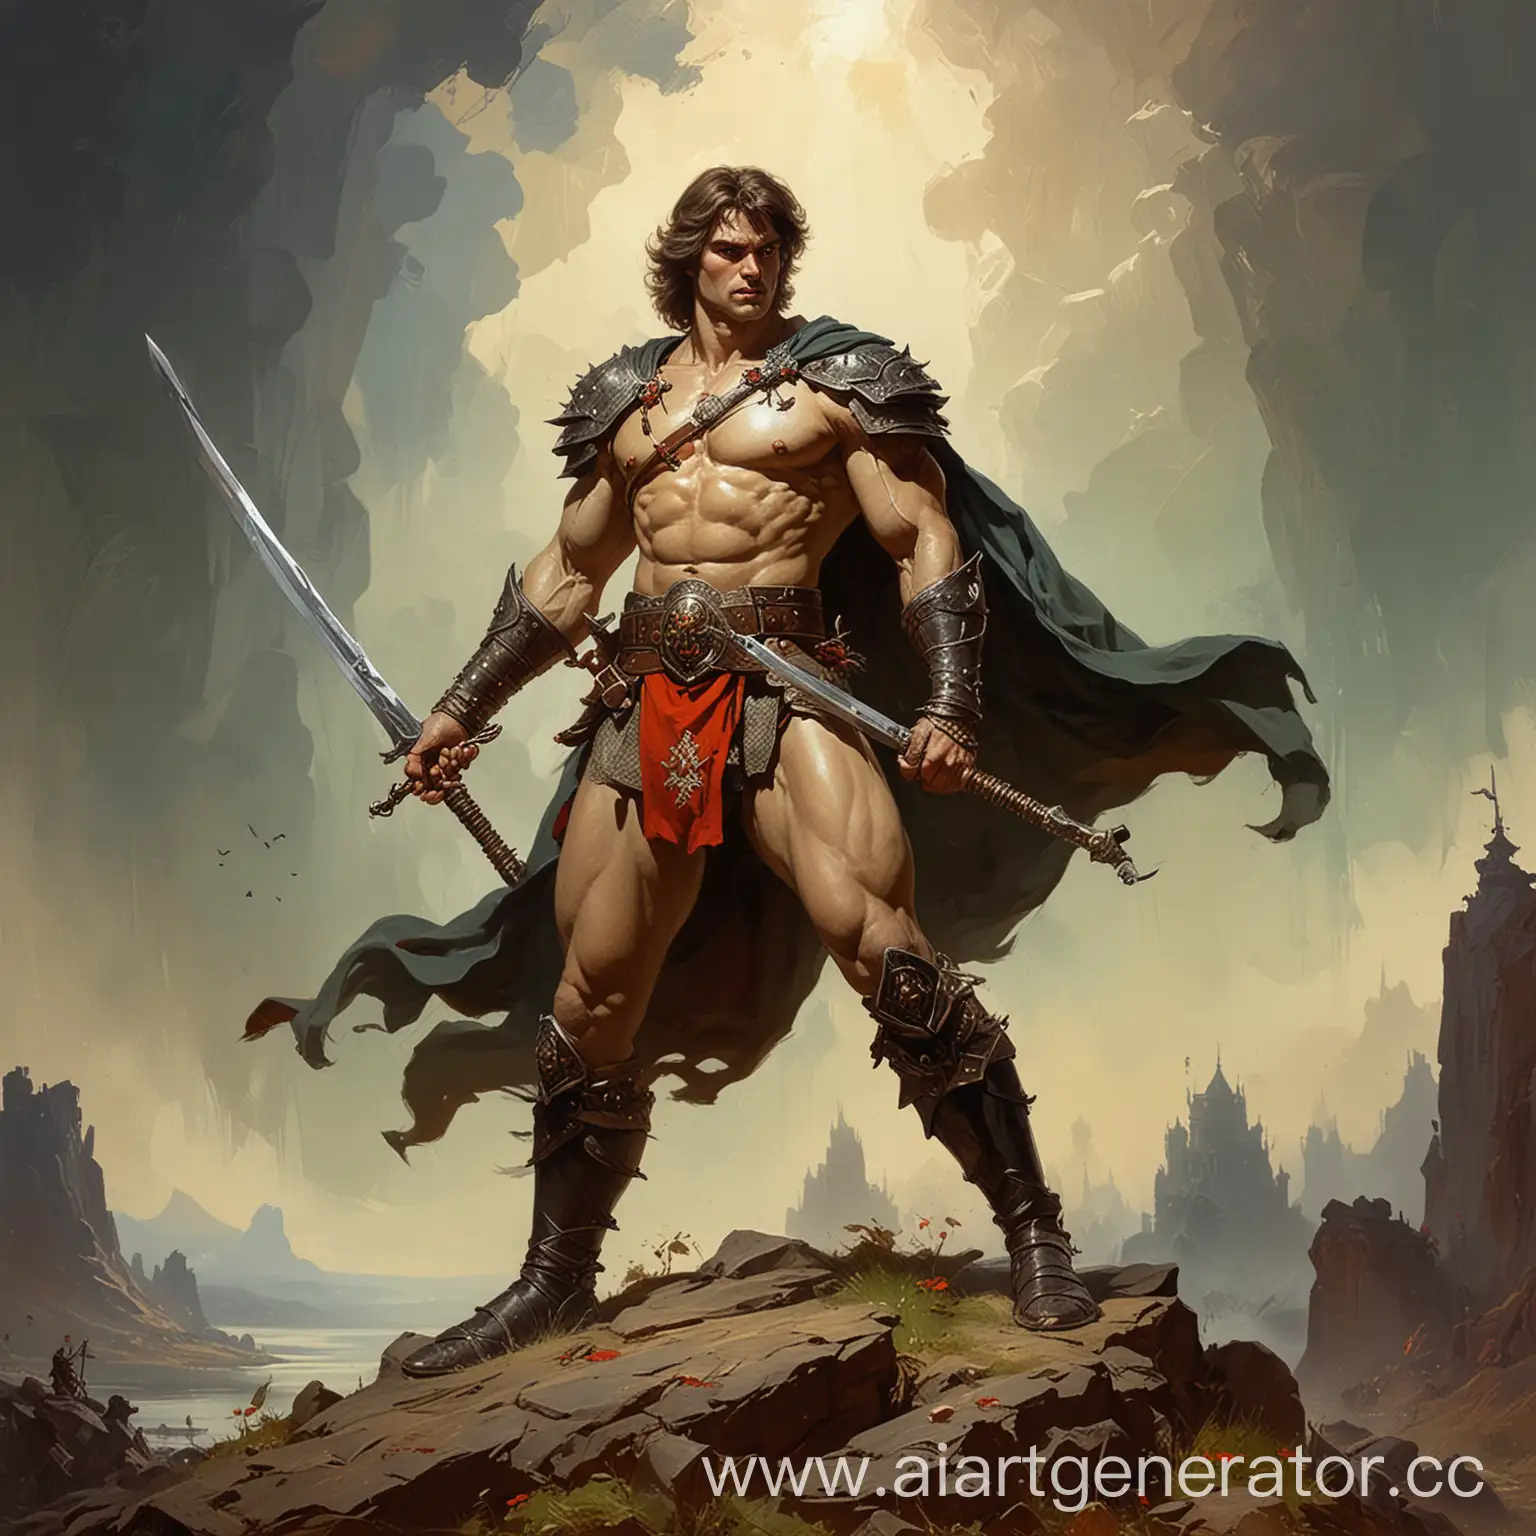 Prince-Vladimir-Warrior-with-Sword-in-Frank-Frazetta-Style